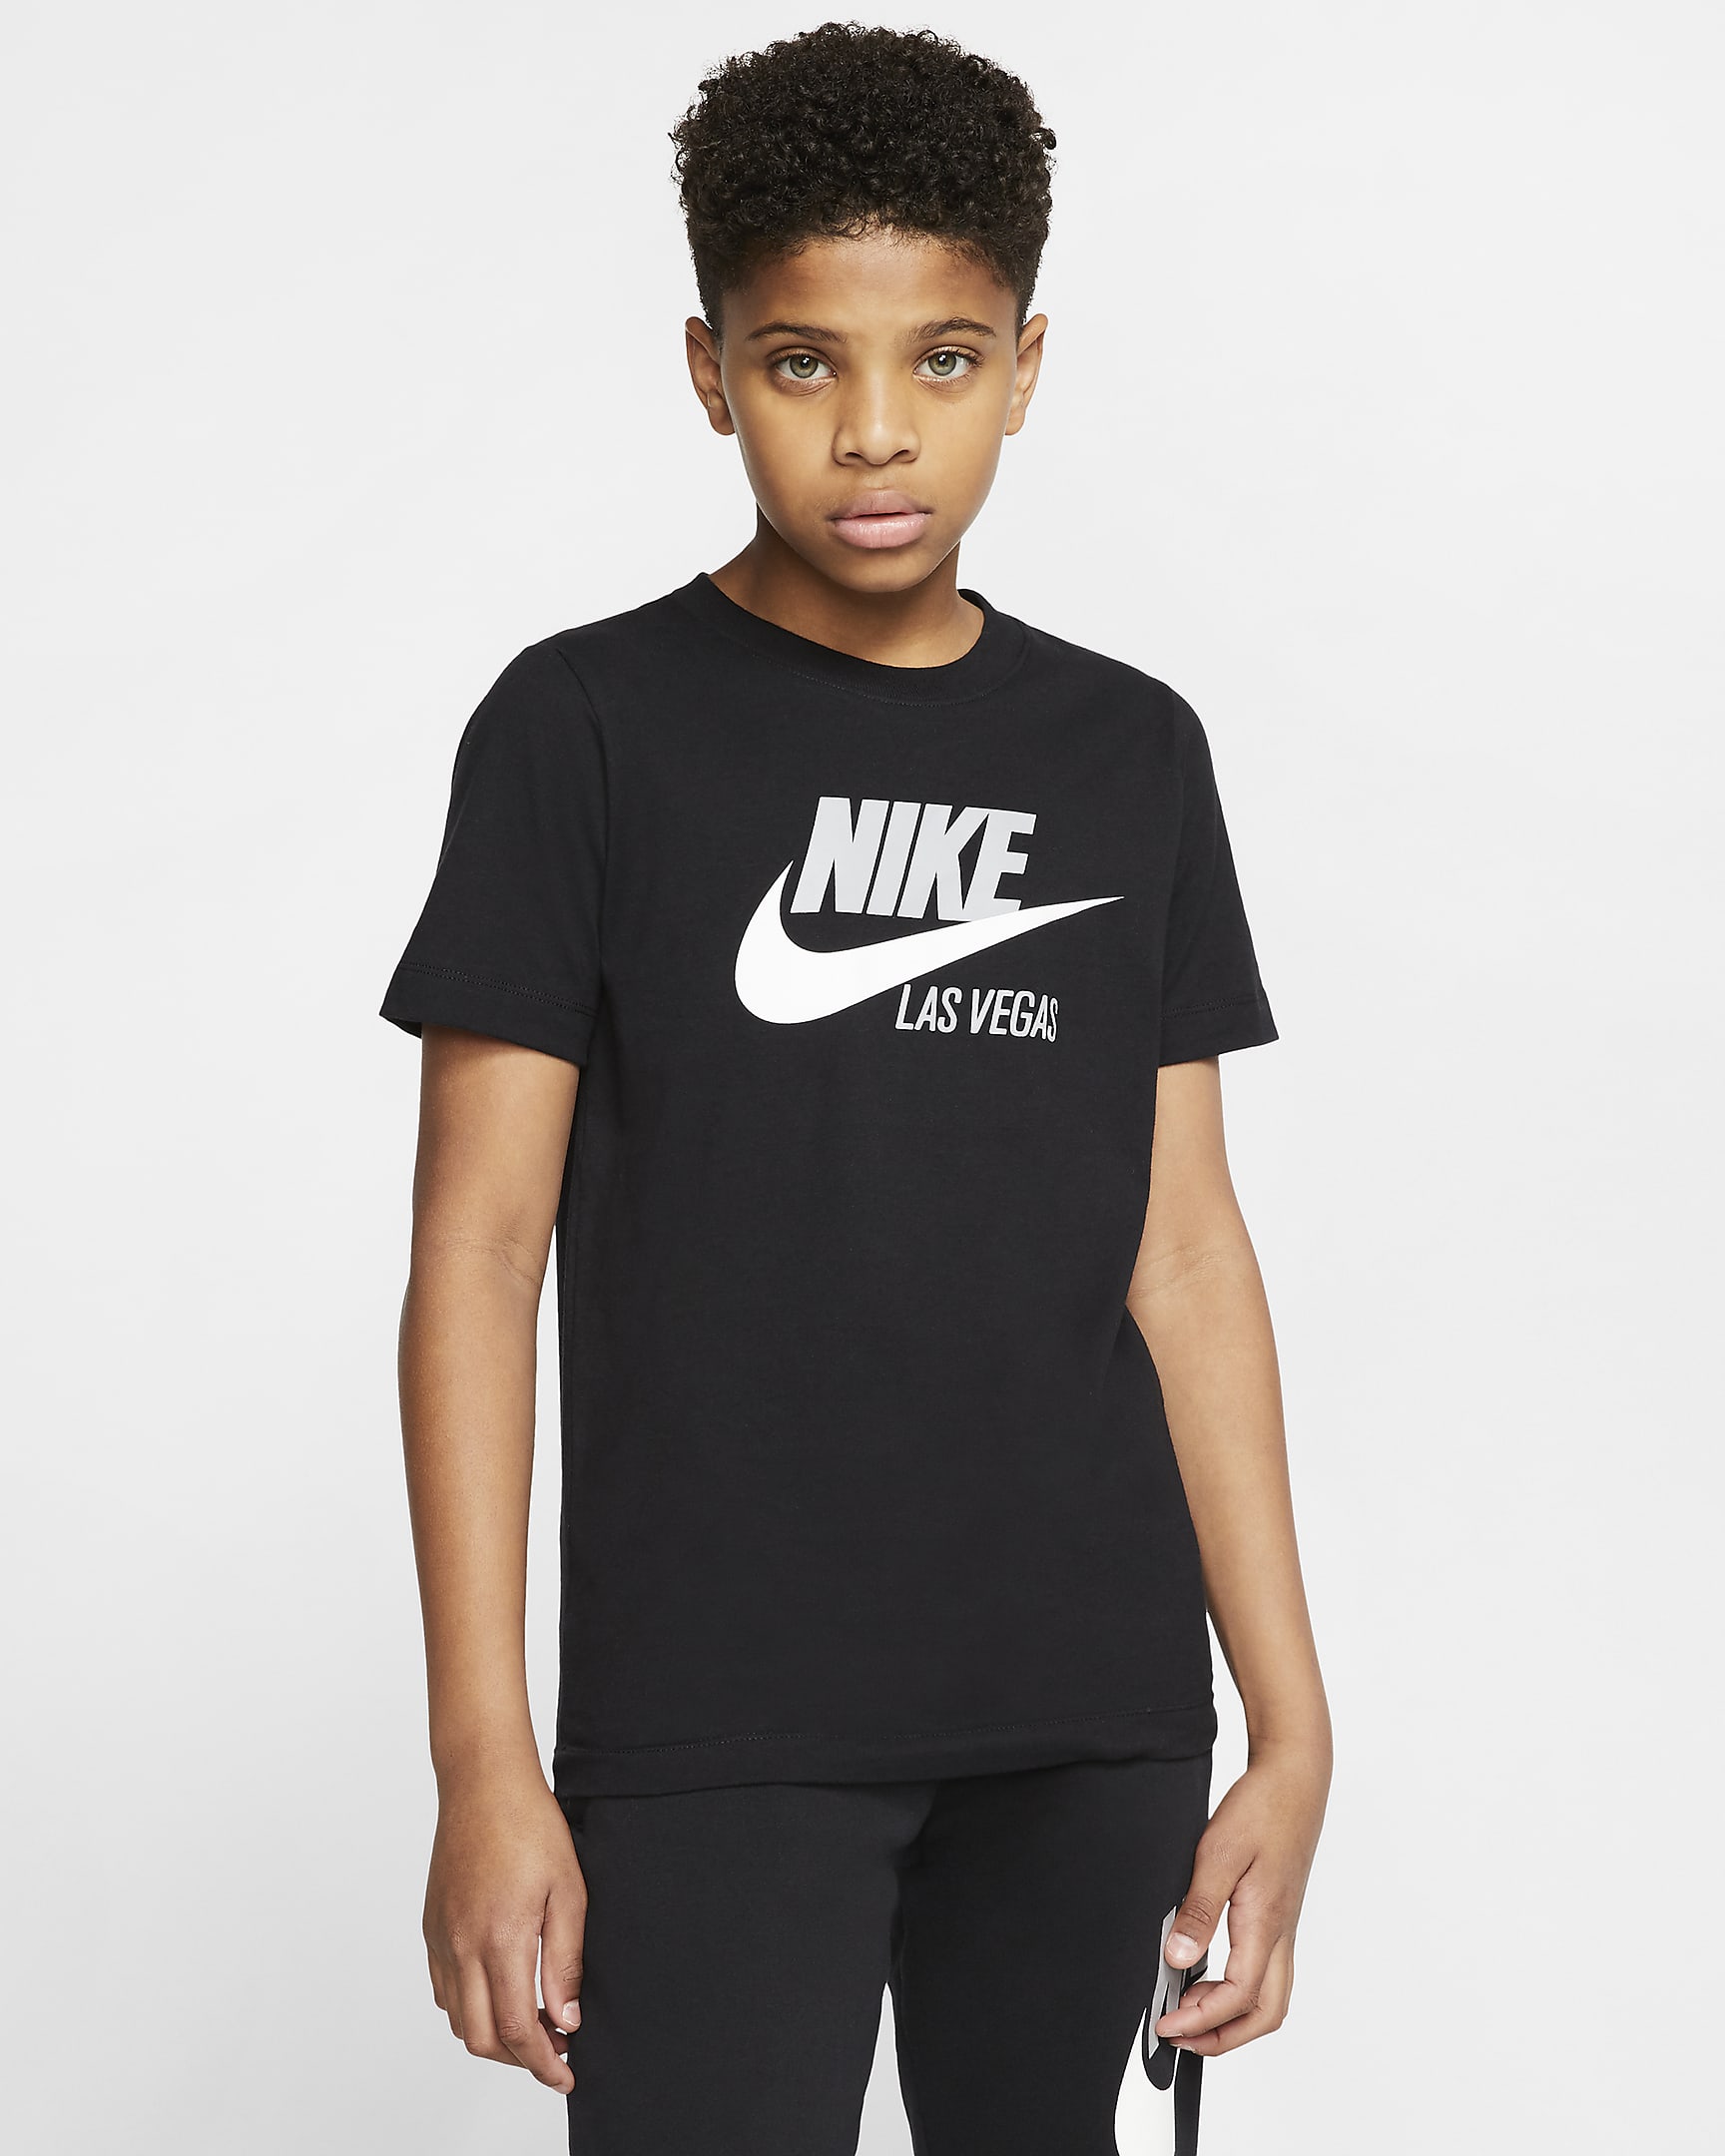 Nike Sportswear Las Vegas Big Kids' T-Shirt. Nike.com